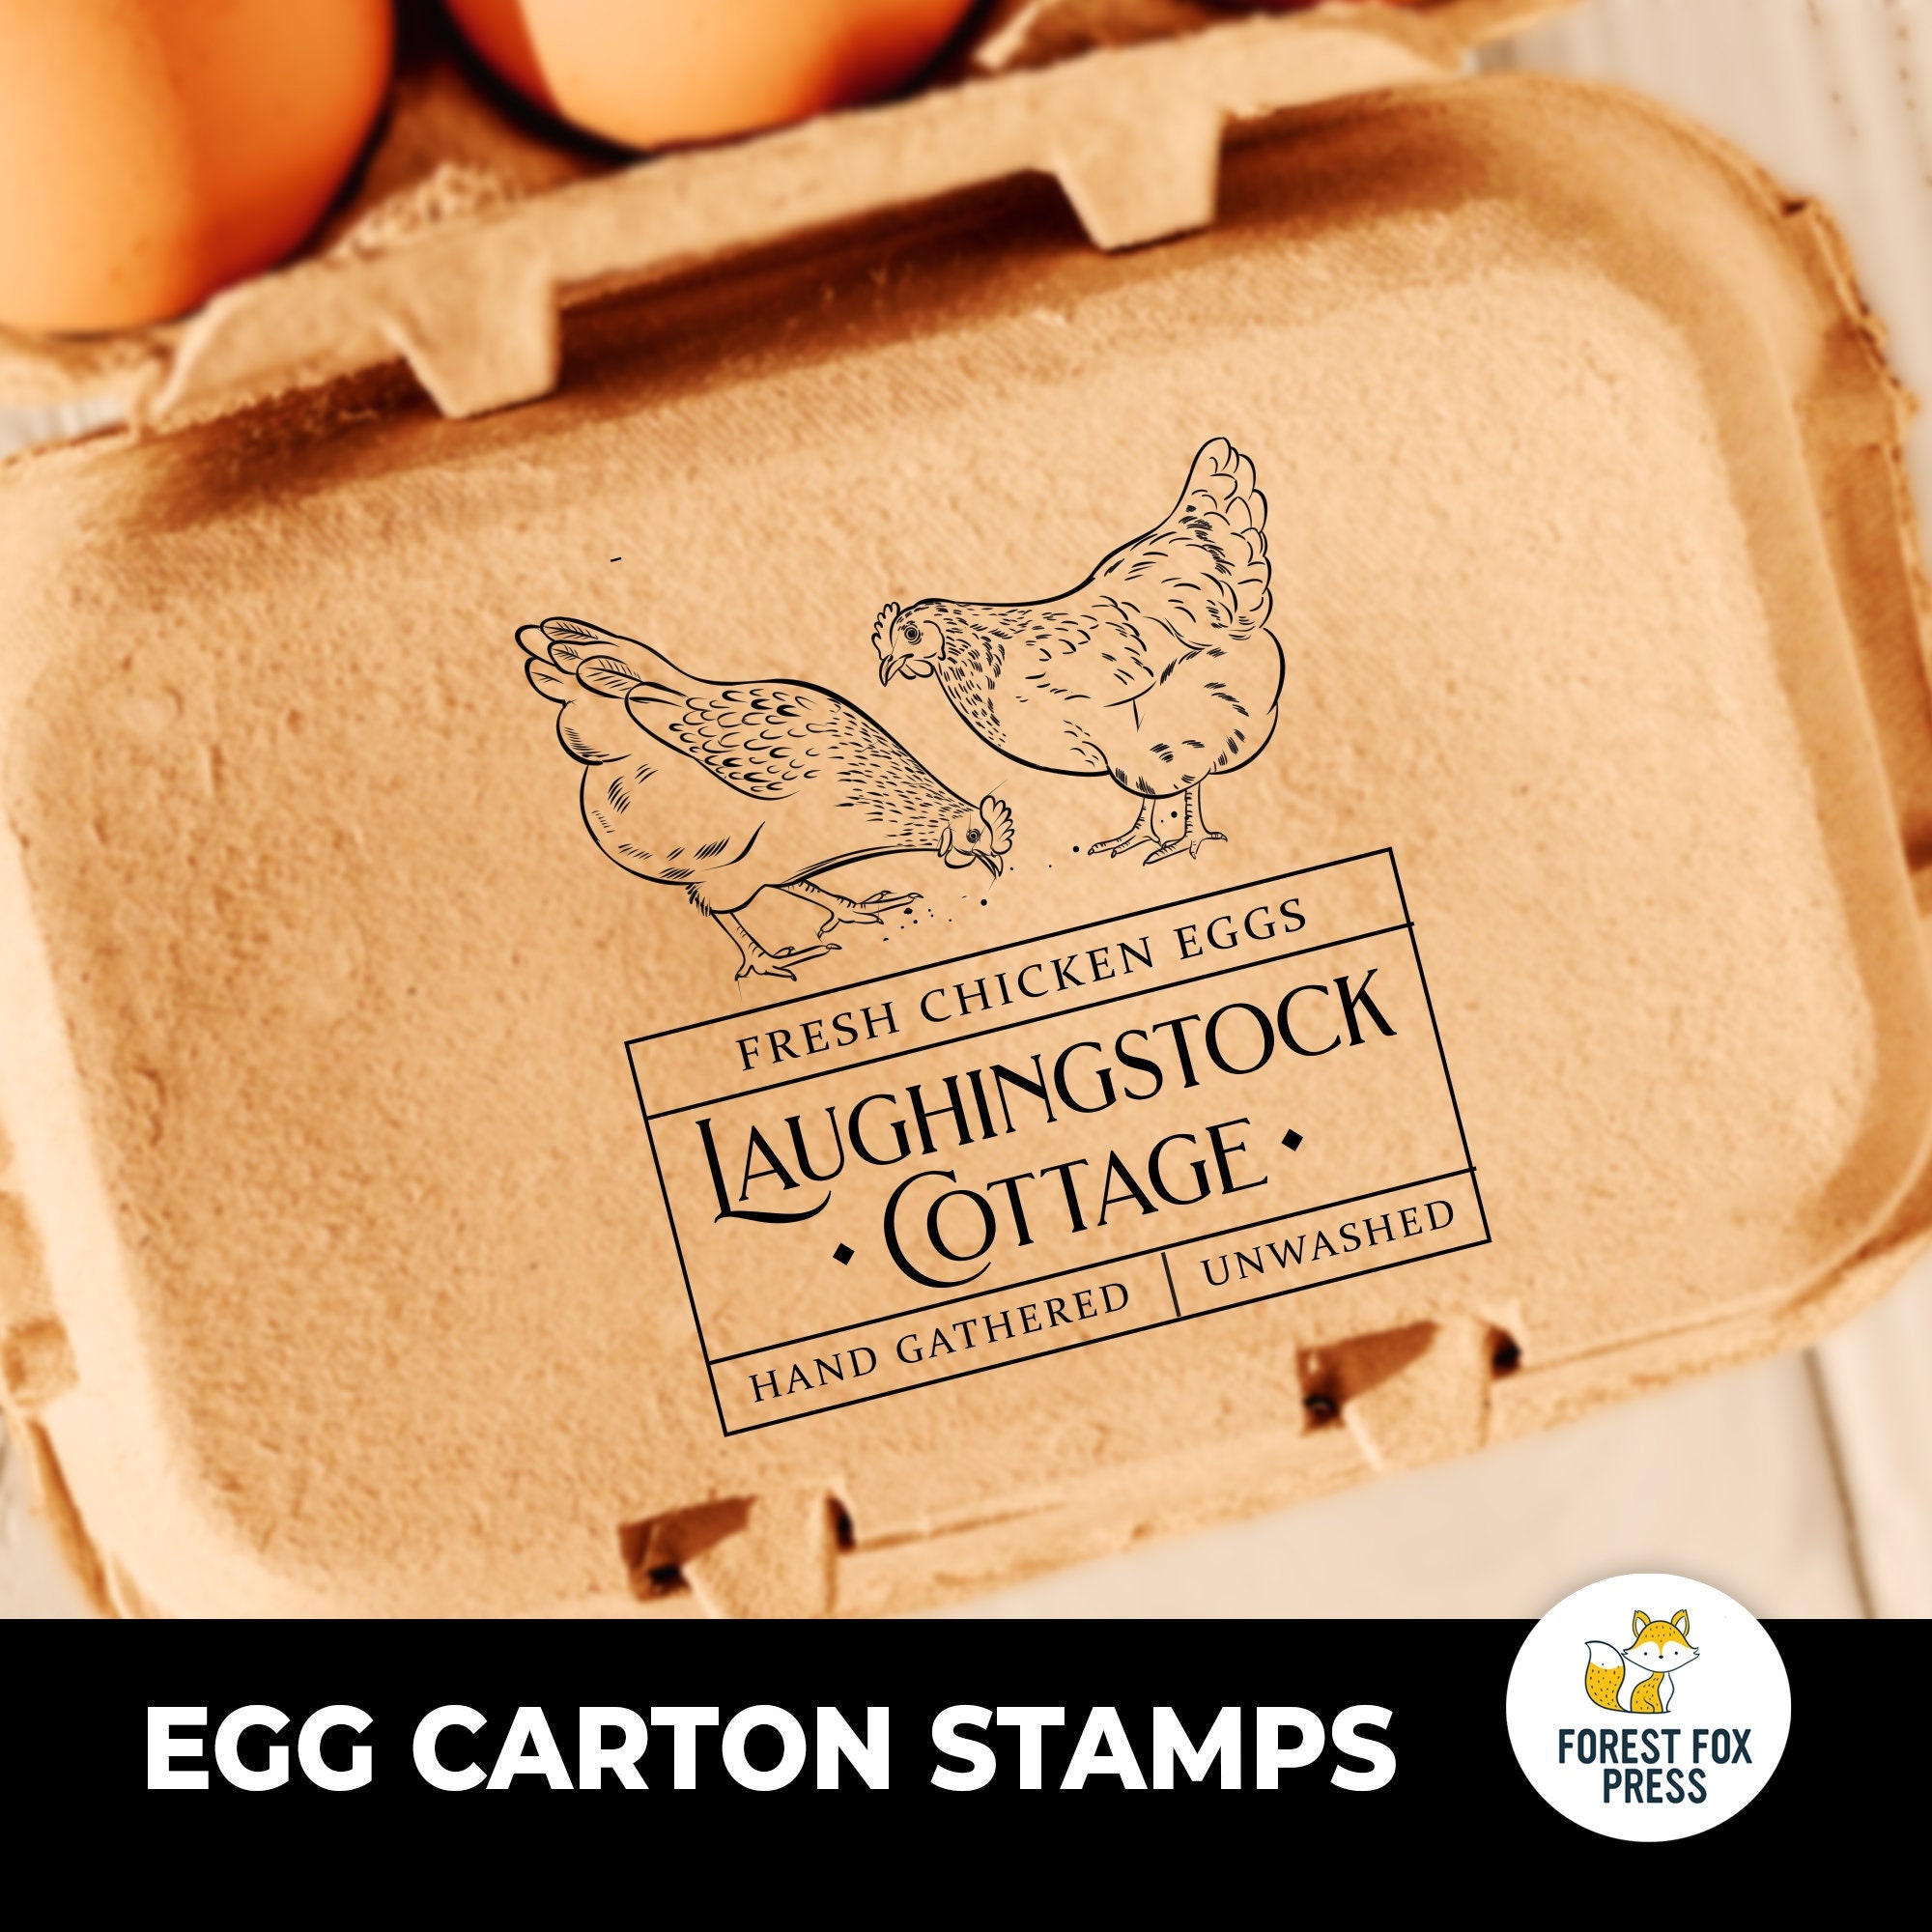 Duck Egg Labels, Personalized Duck Sticker, Egg Carton Label